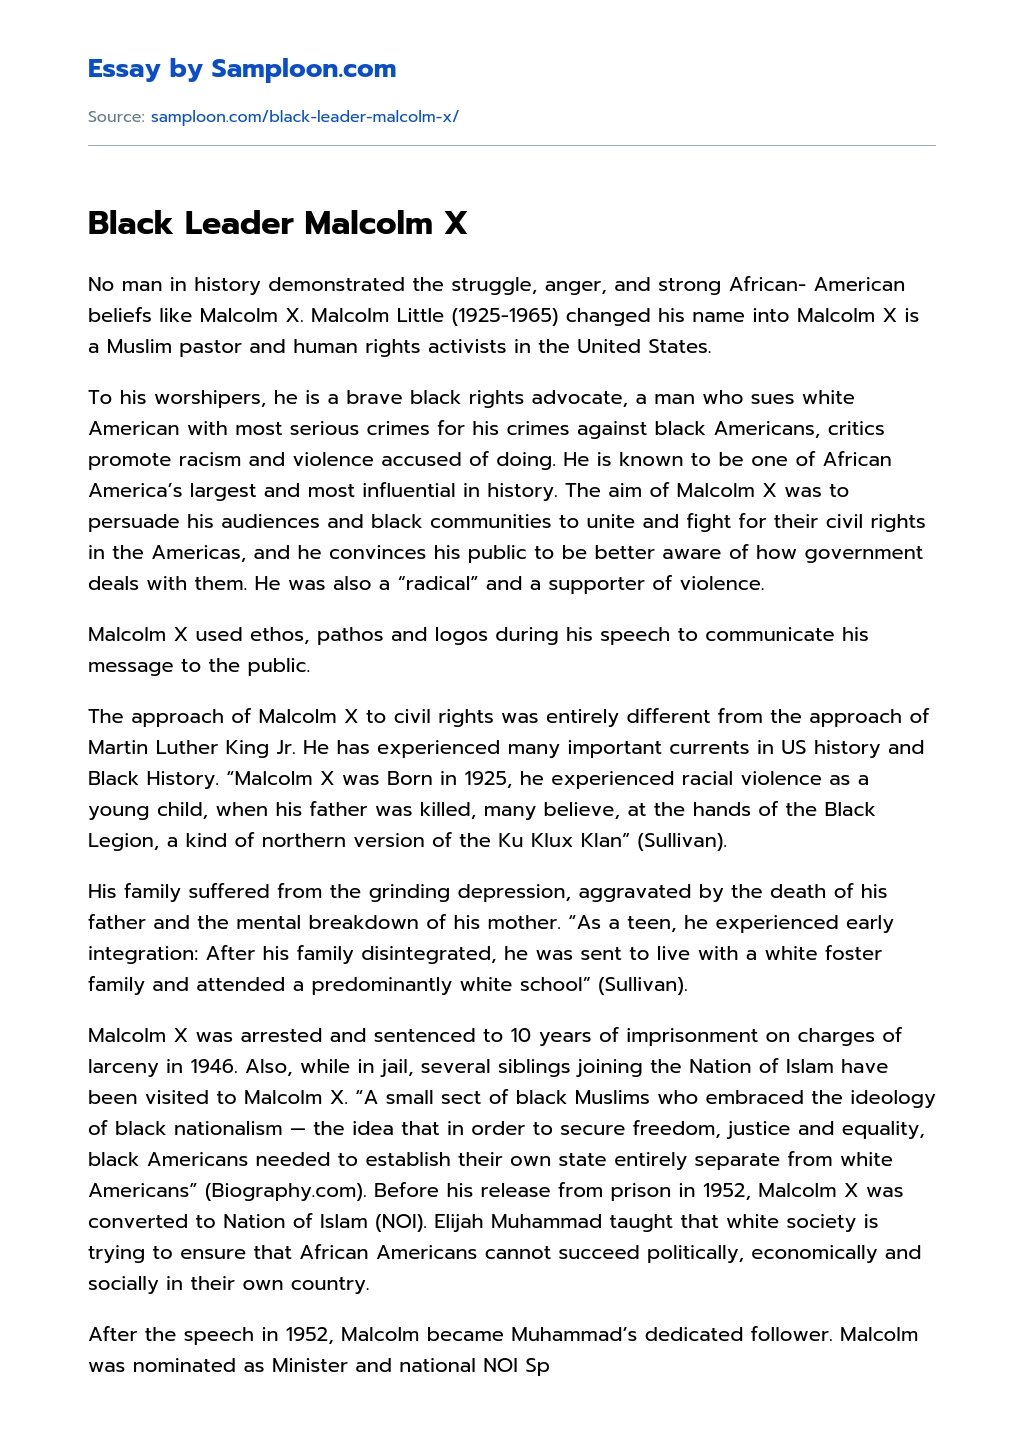 Black Leader Malcolm X Personal Essay essay